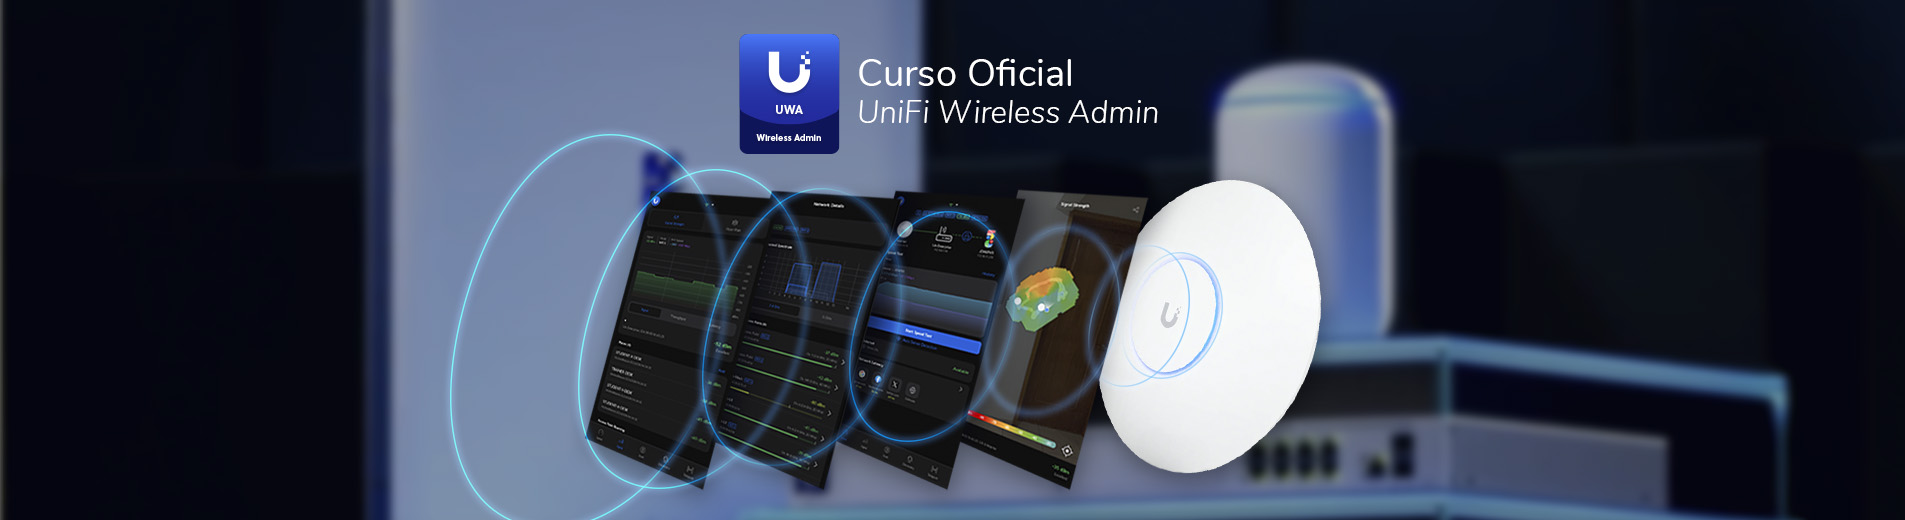 UniFi Wireless Admin UWA